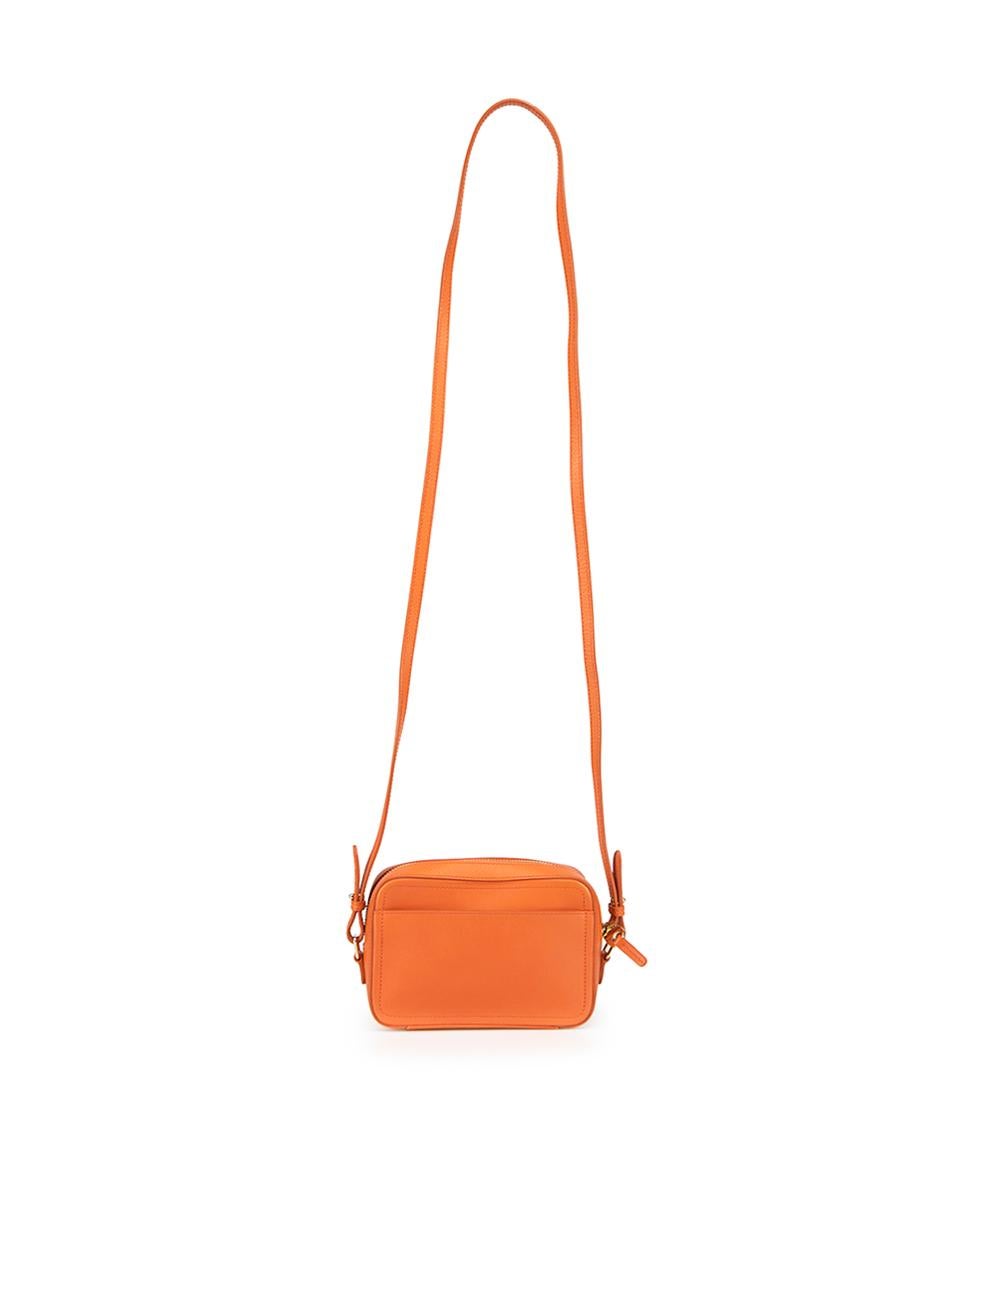 Women's Smythson Orange Leather Crossbody Bag For Sale